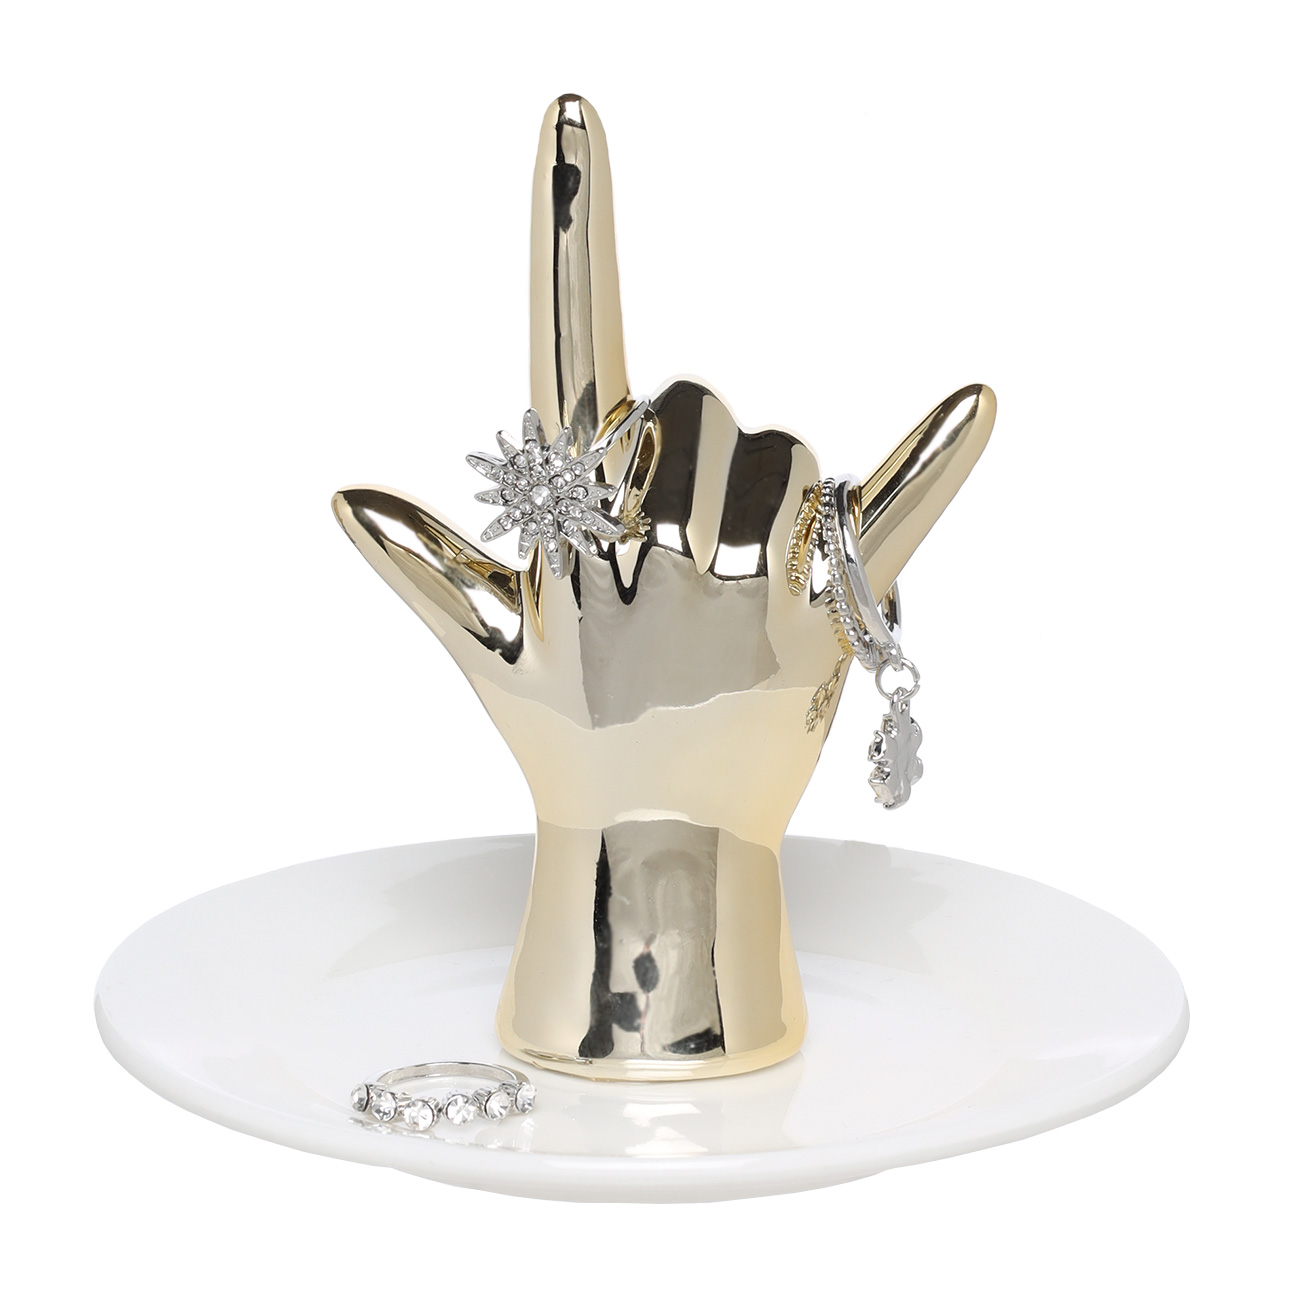 Jewelry holder, 11 cm, ceramic / metal, white and gold, Hand, Fantastic gold изображение № 3